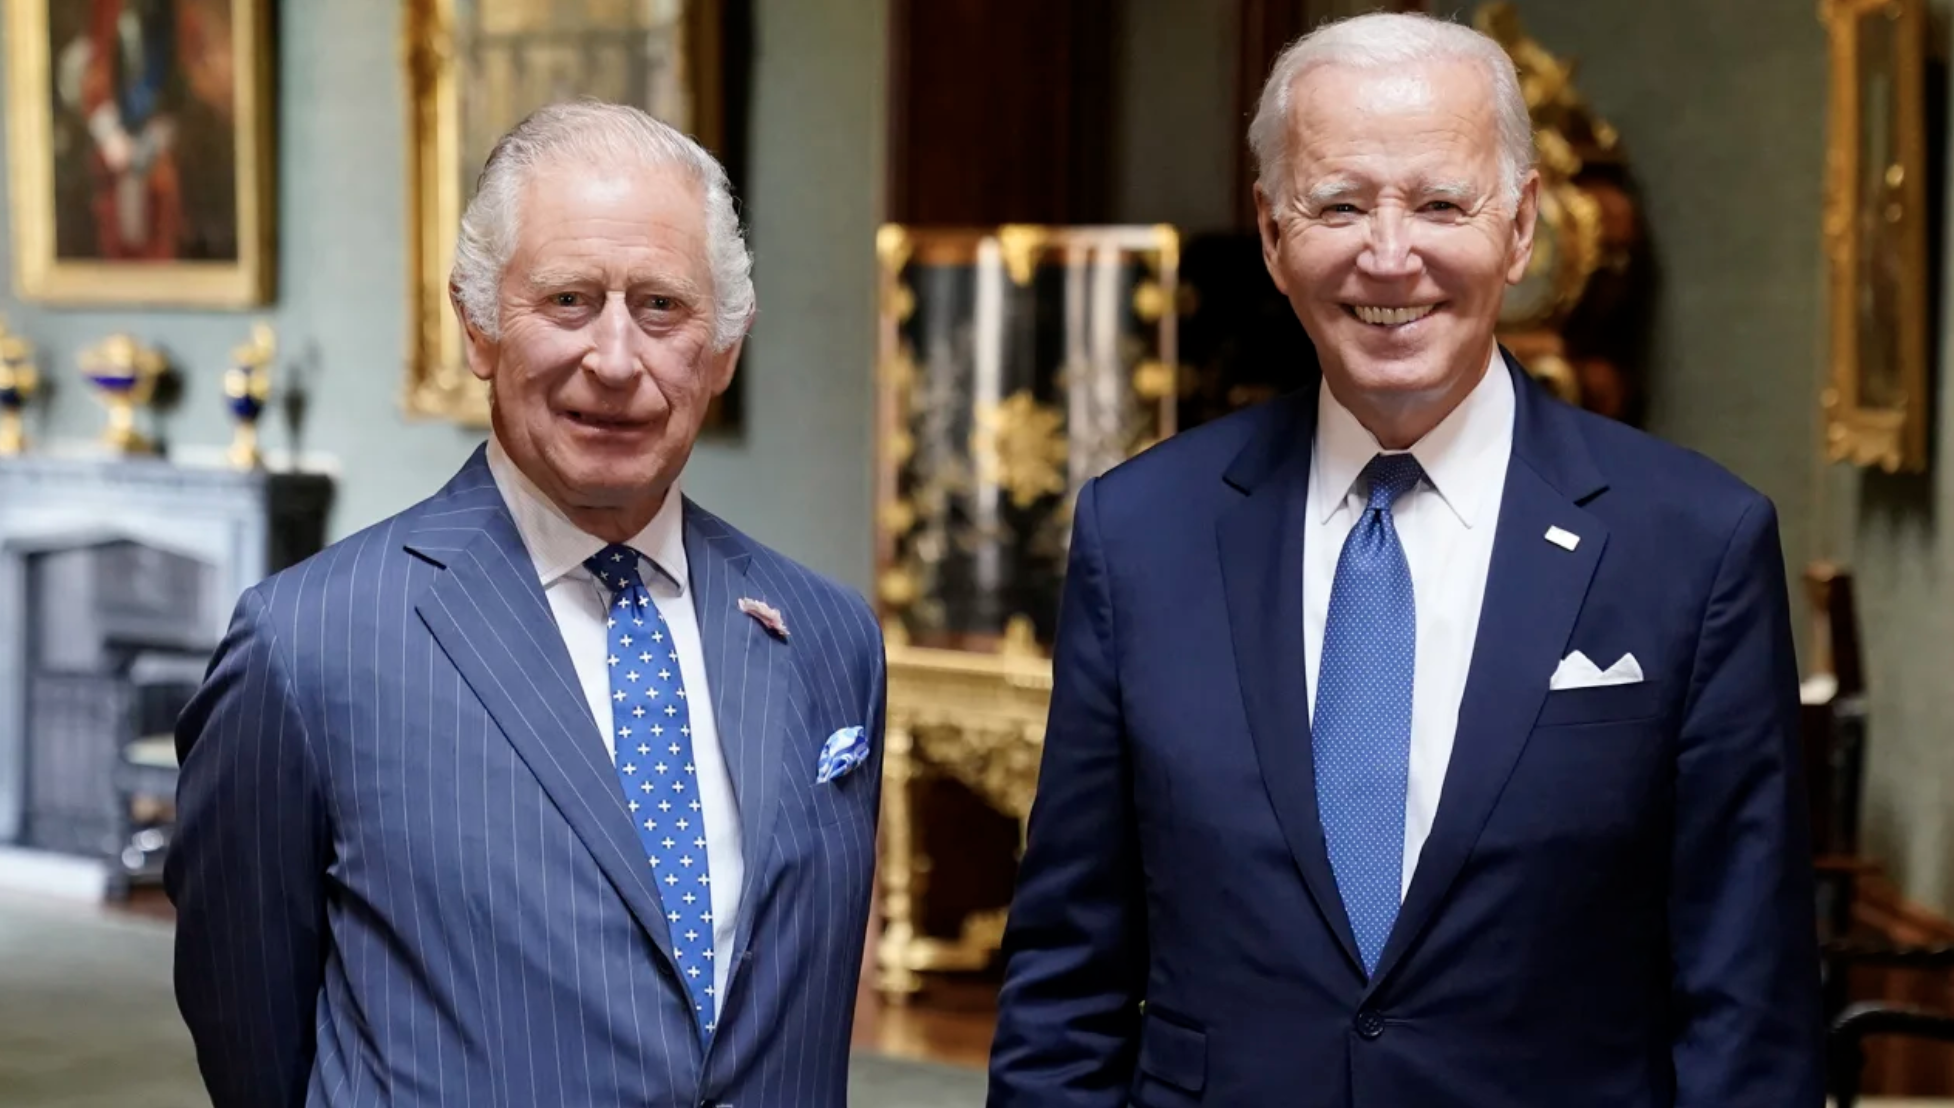 King Charles and Joe Biden